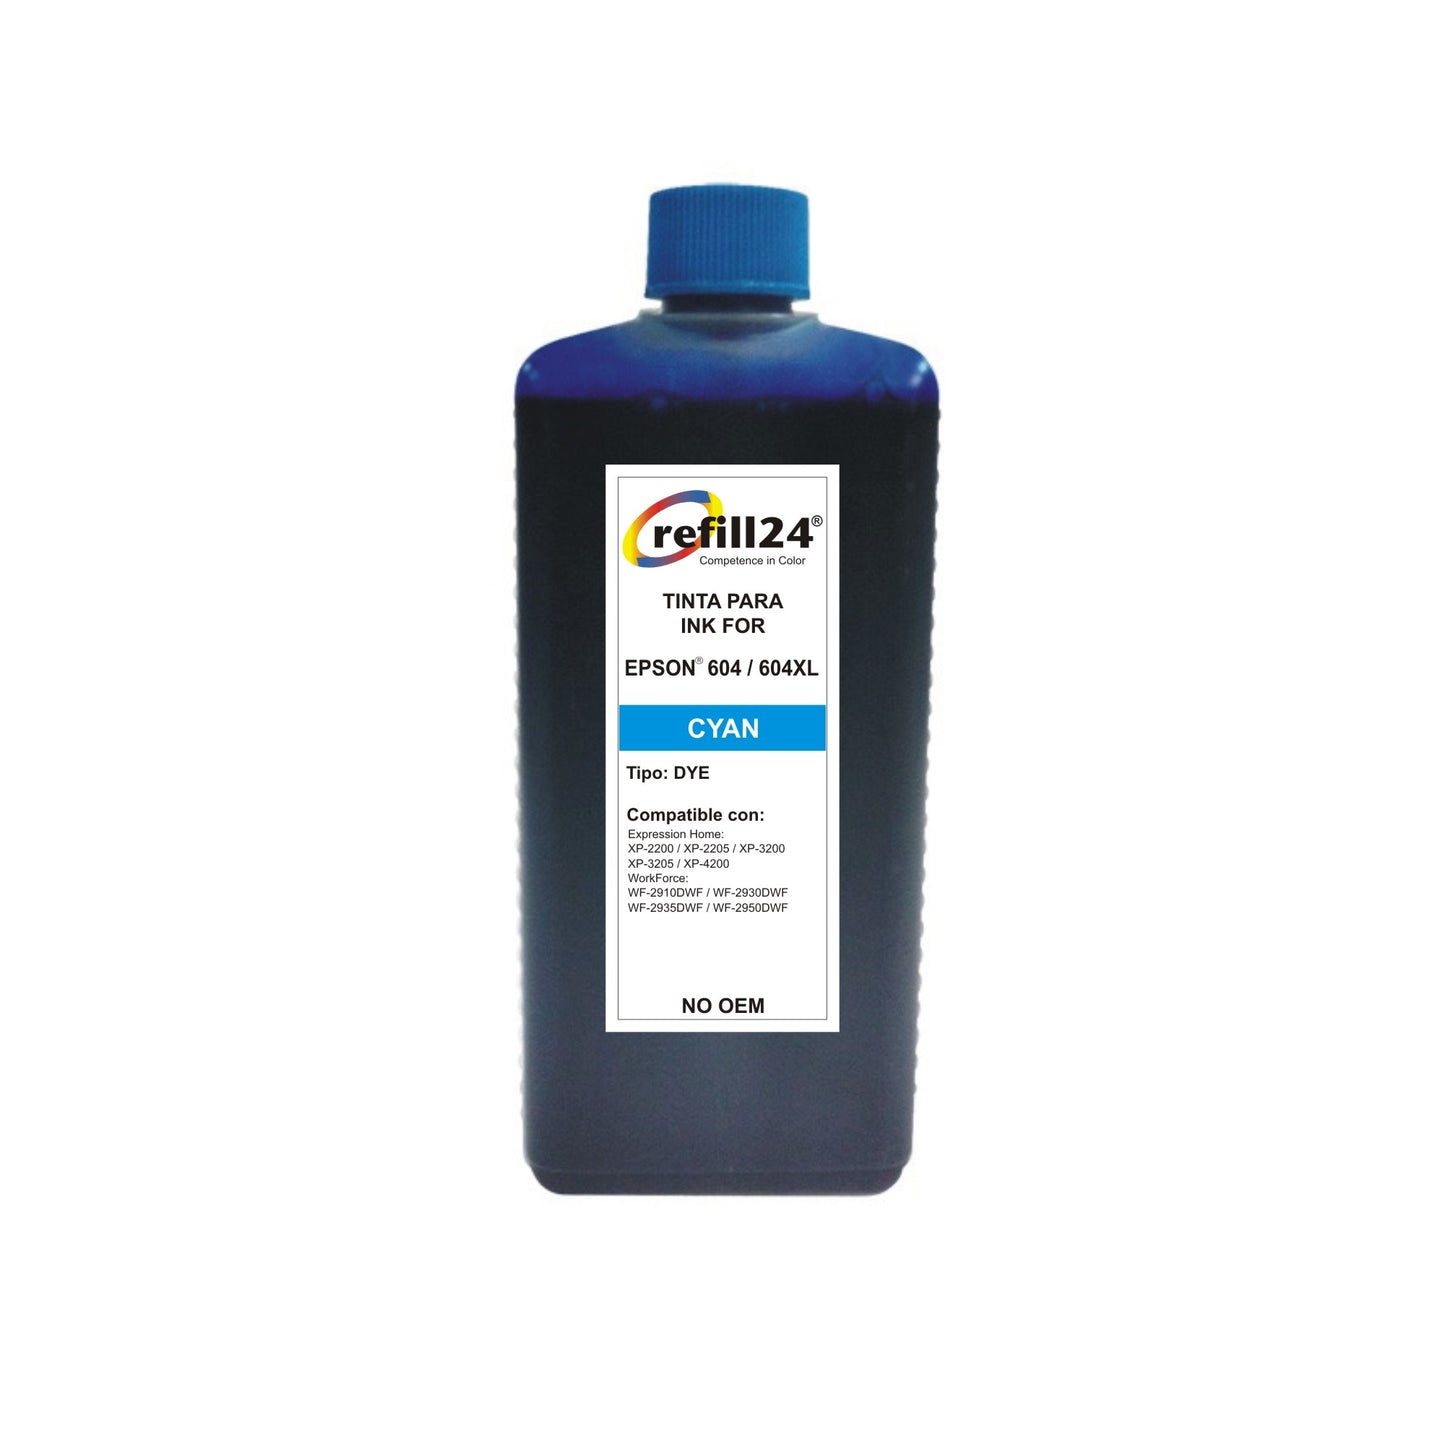 Tinta Premium Refill 24® para cartuchos Epson 604/604XL